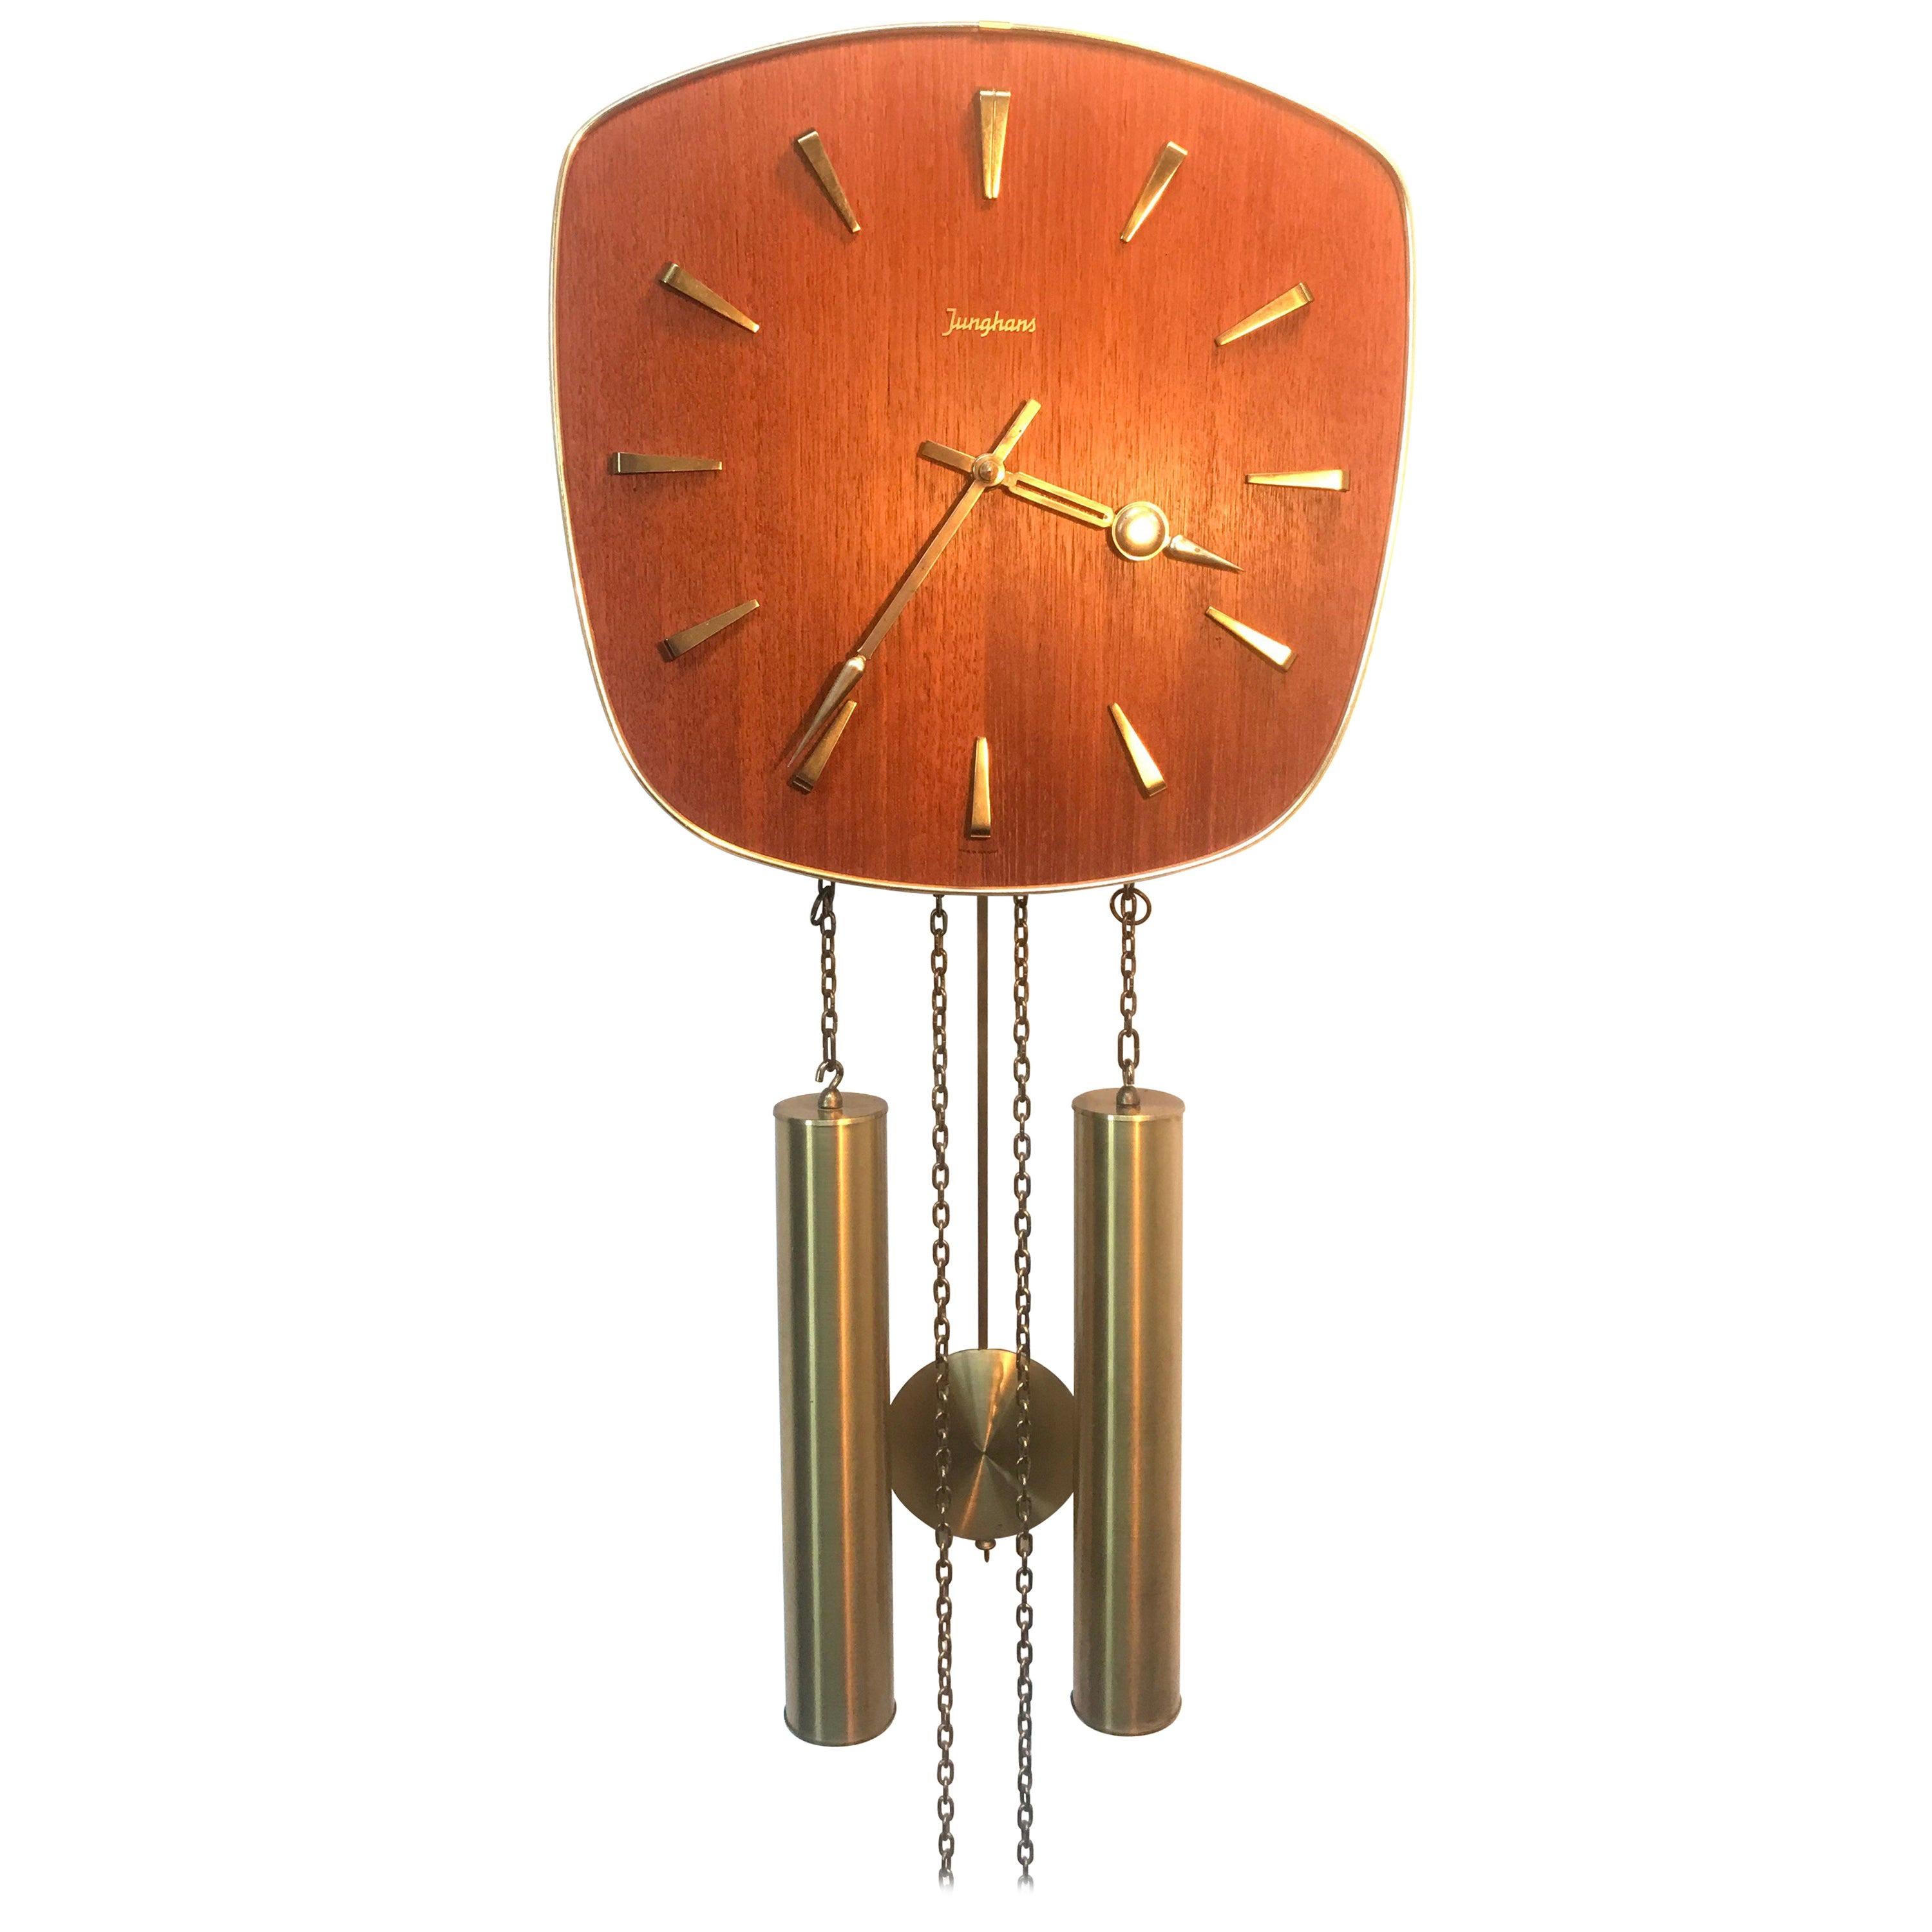 Vintage Junghans Pendulum Wall Clock in Teak from the 1960s